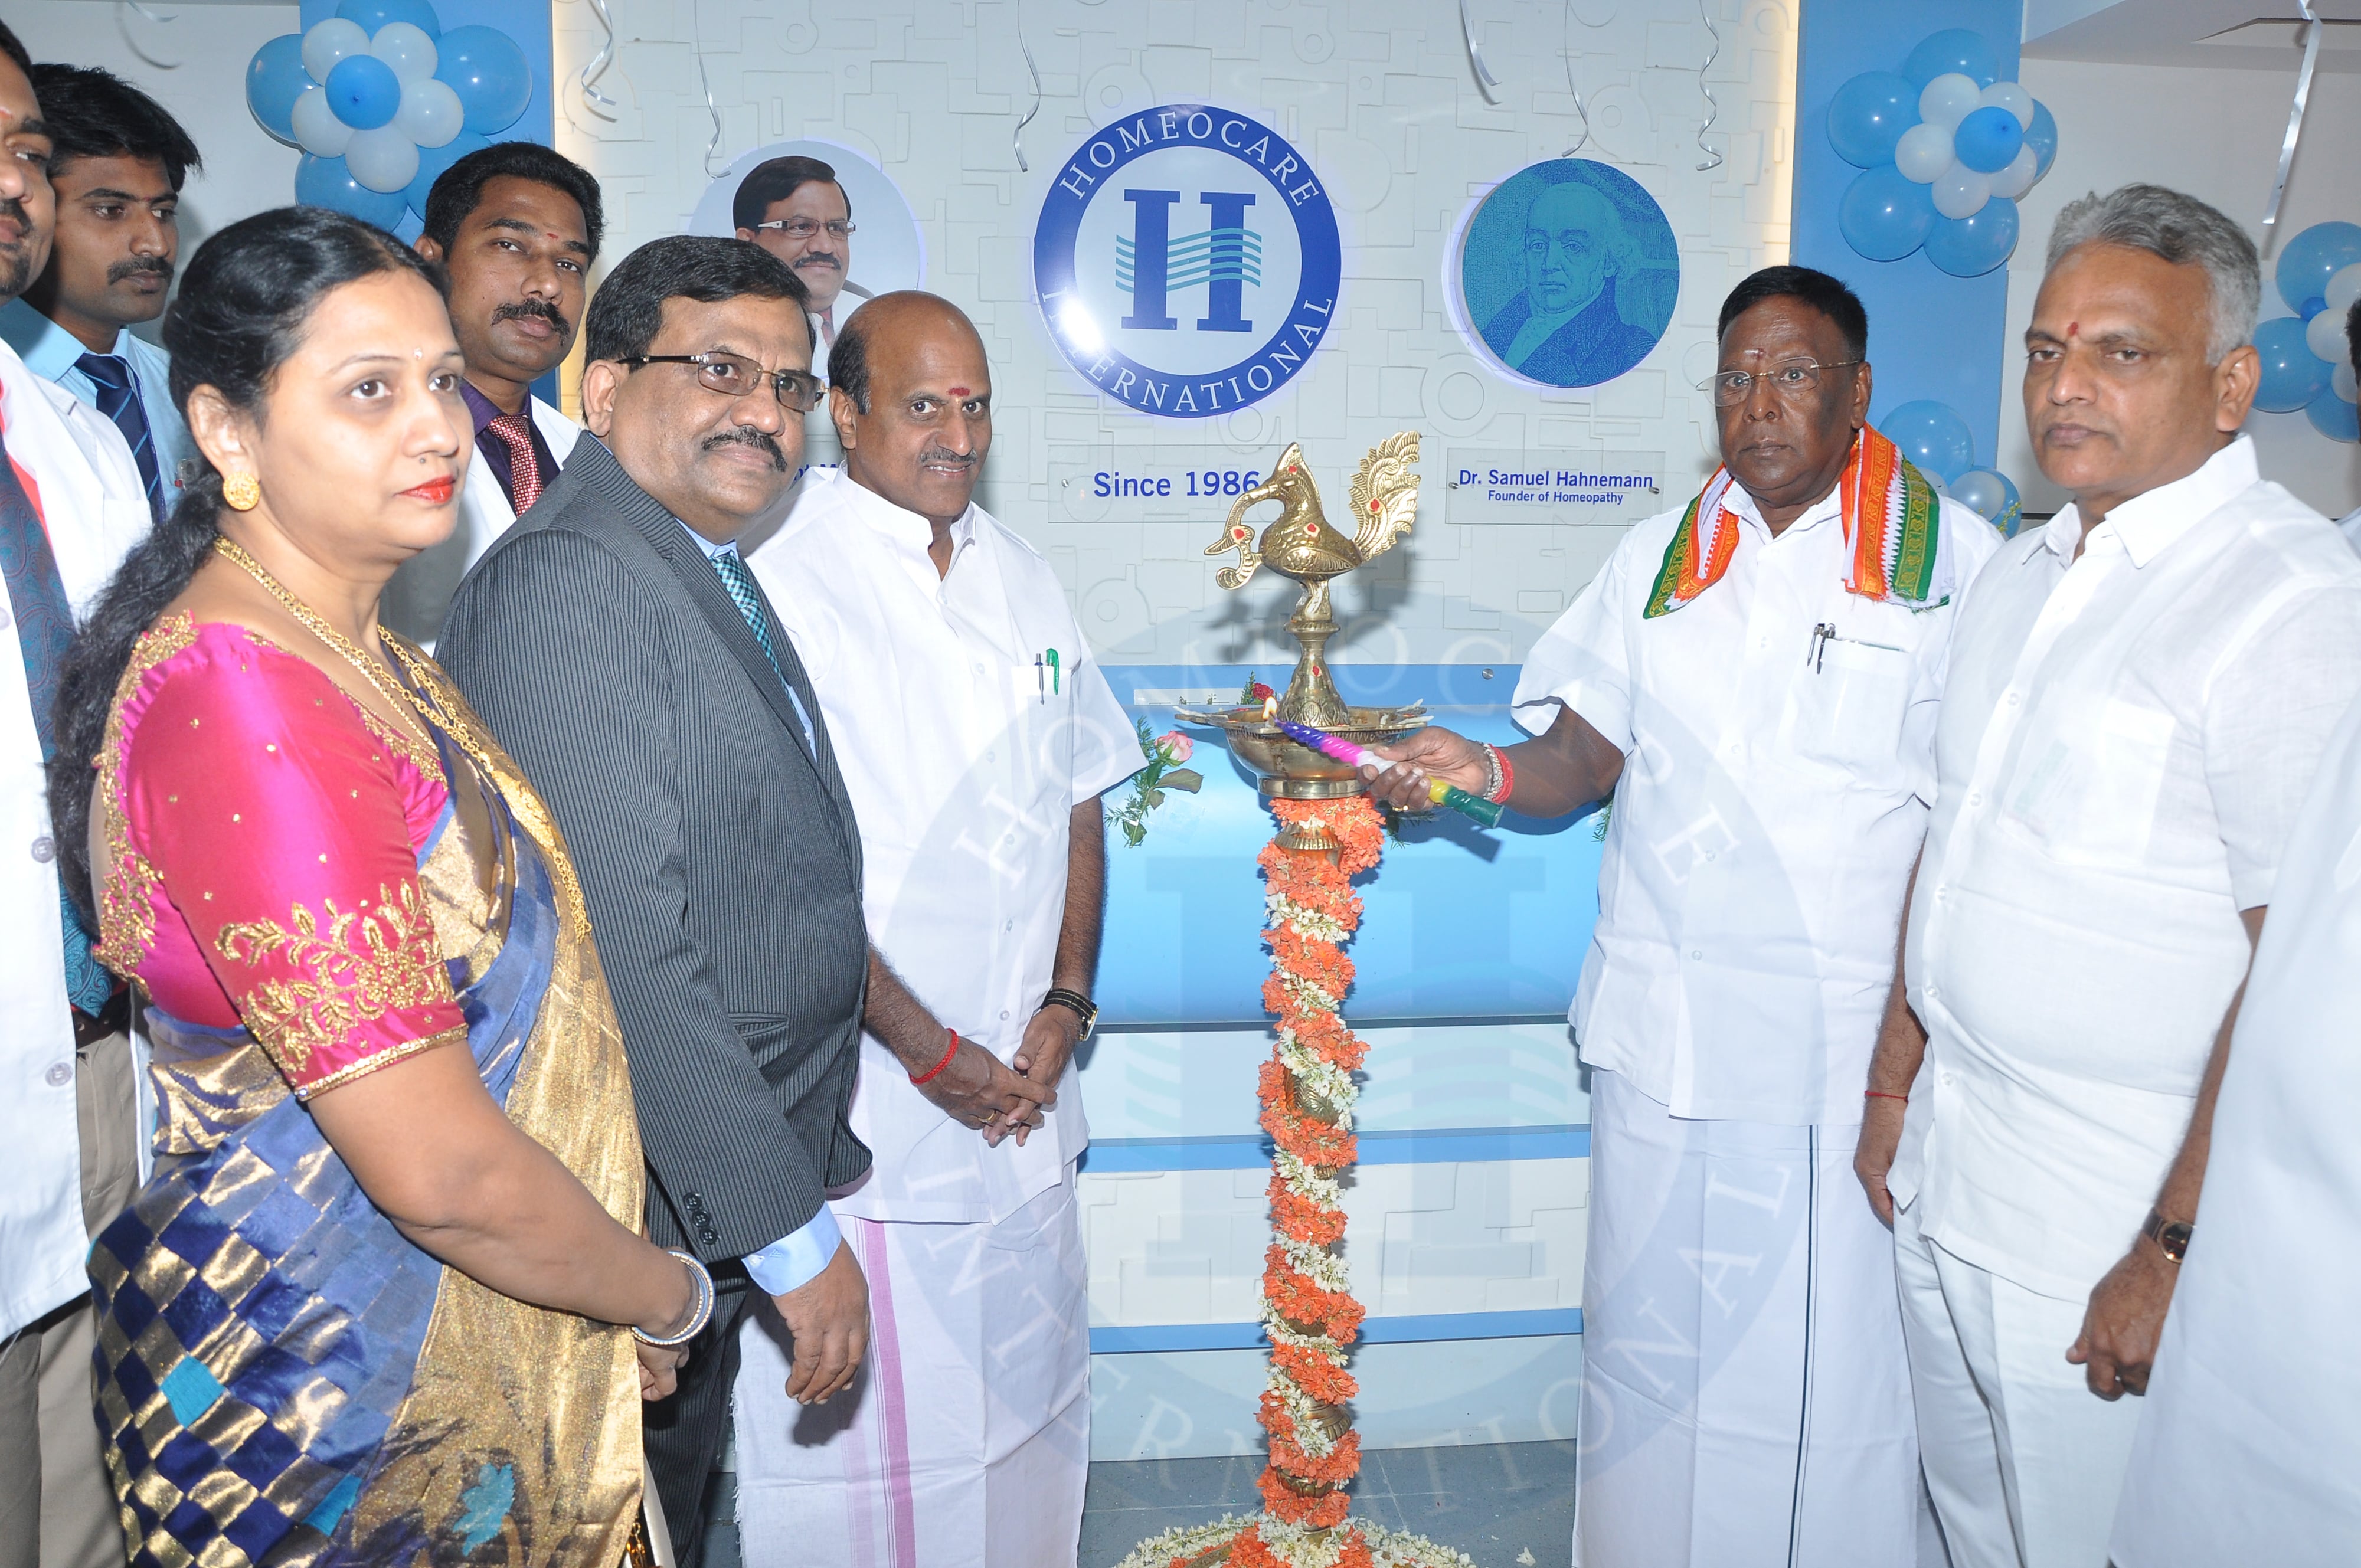 Homeocare International new branch in Puducherry 3rd branch event inaugurated by CM V.Narayanswamy Garu